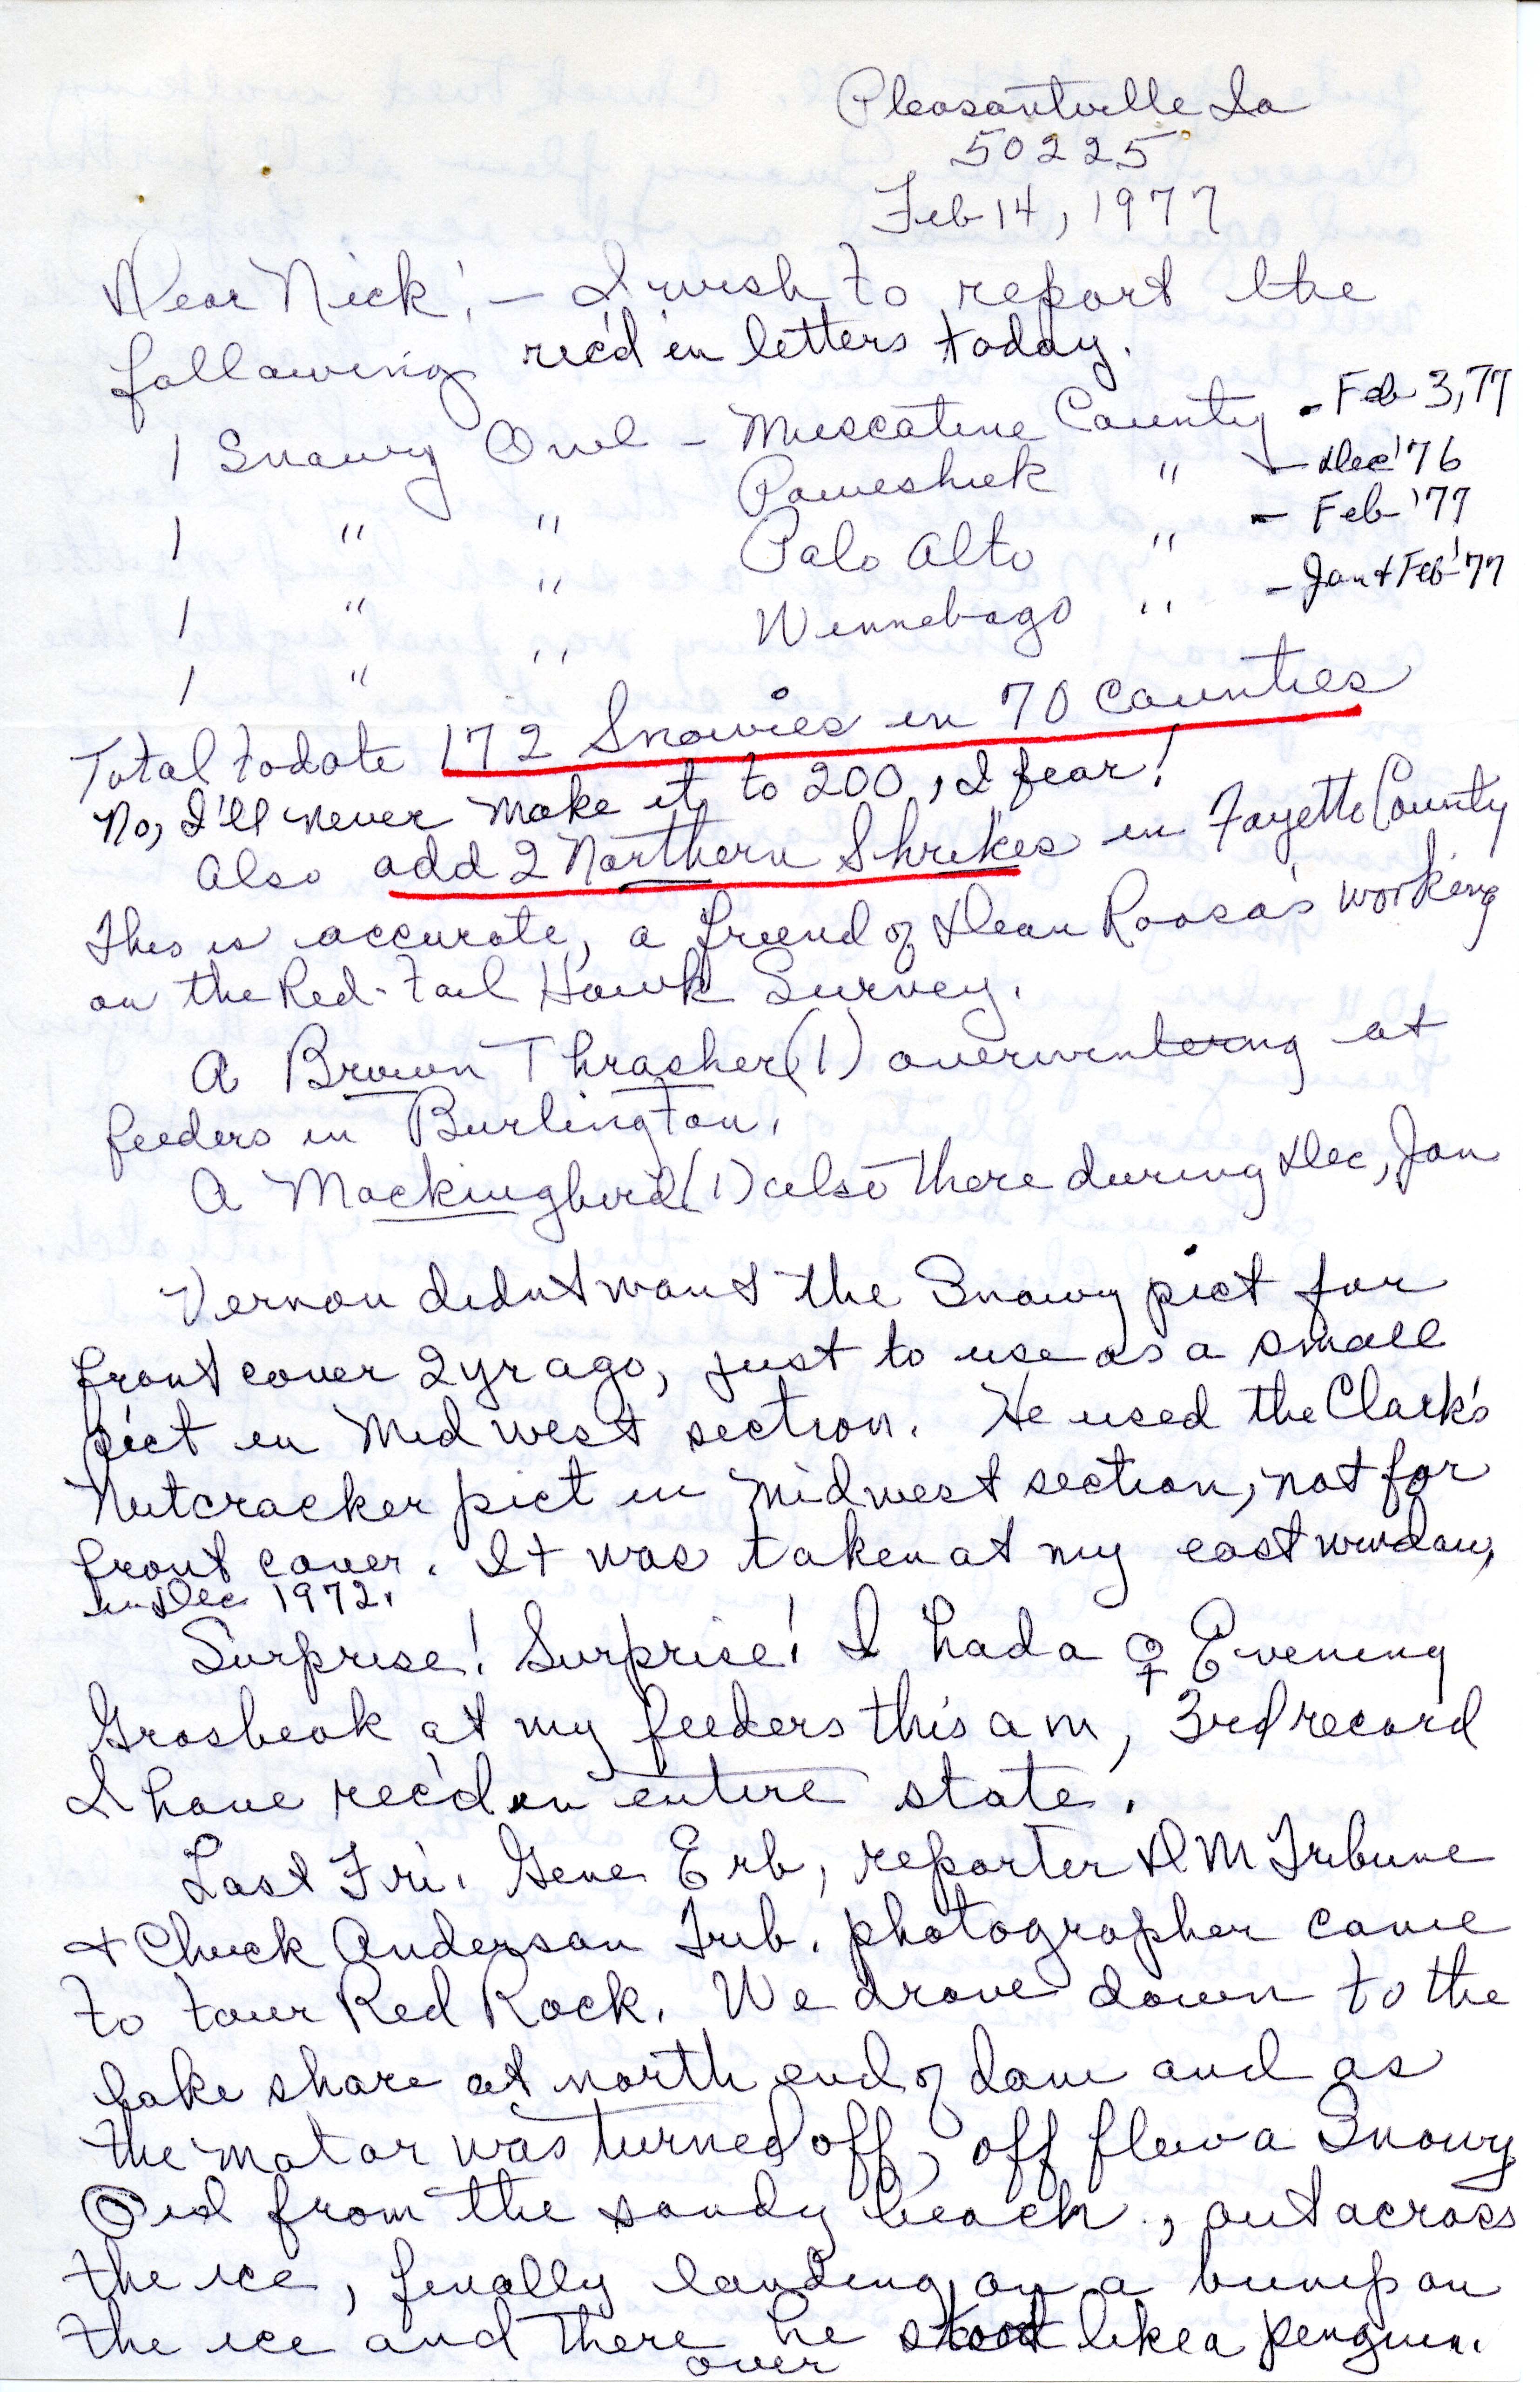 Gladys Black letter to Nicholas S. Halmi regarding sightings,  February 14, 1977